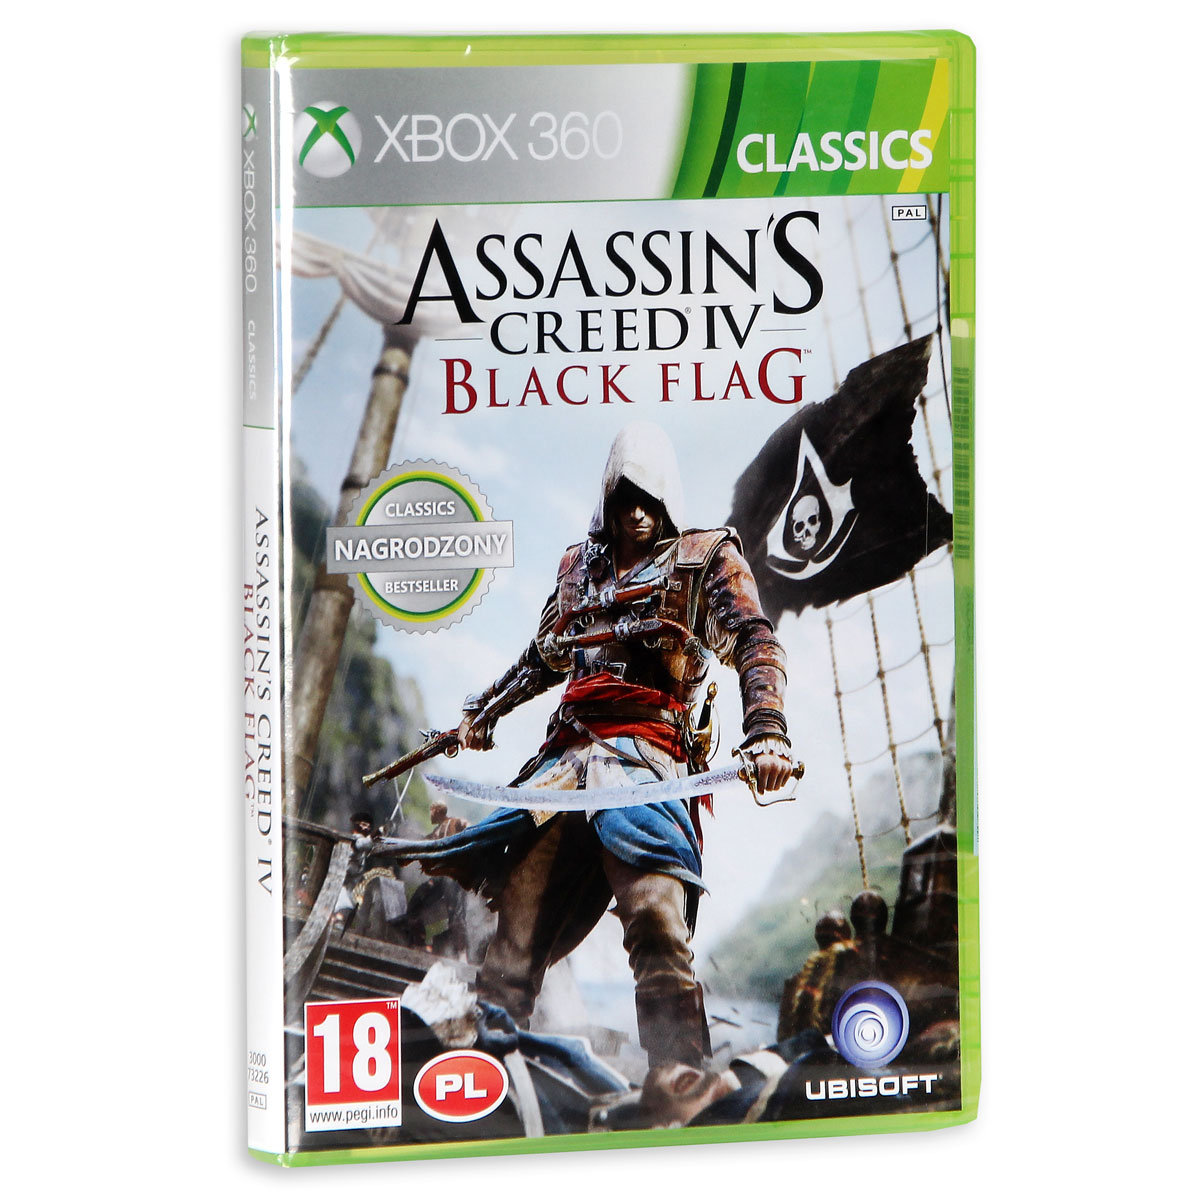 Assassin s xbox 360. Ассасин Крид 4 на Xbox 360. Assassin's Creed Black Flag Xbox 360. Ассасин Крид 4 на Икс бокс 360. Assassins Creed 4 Black Flag Xbox 360.